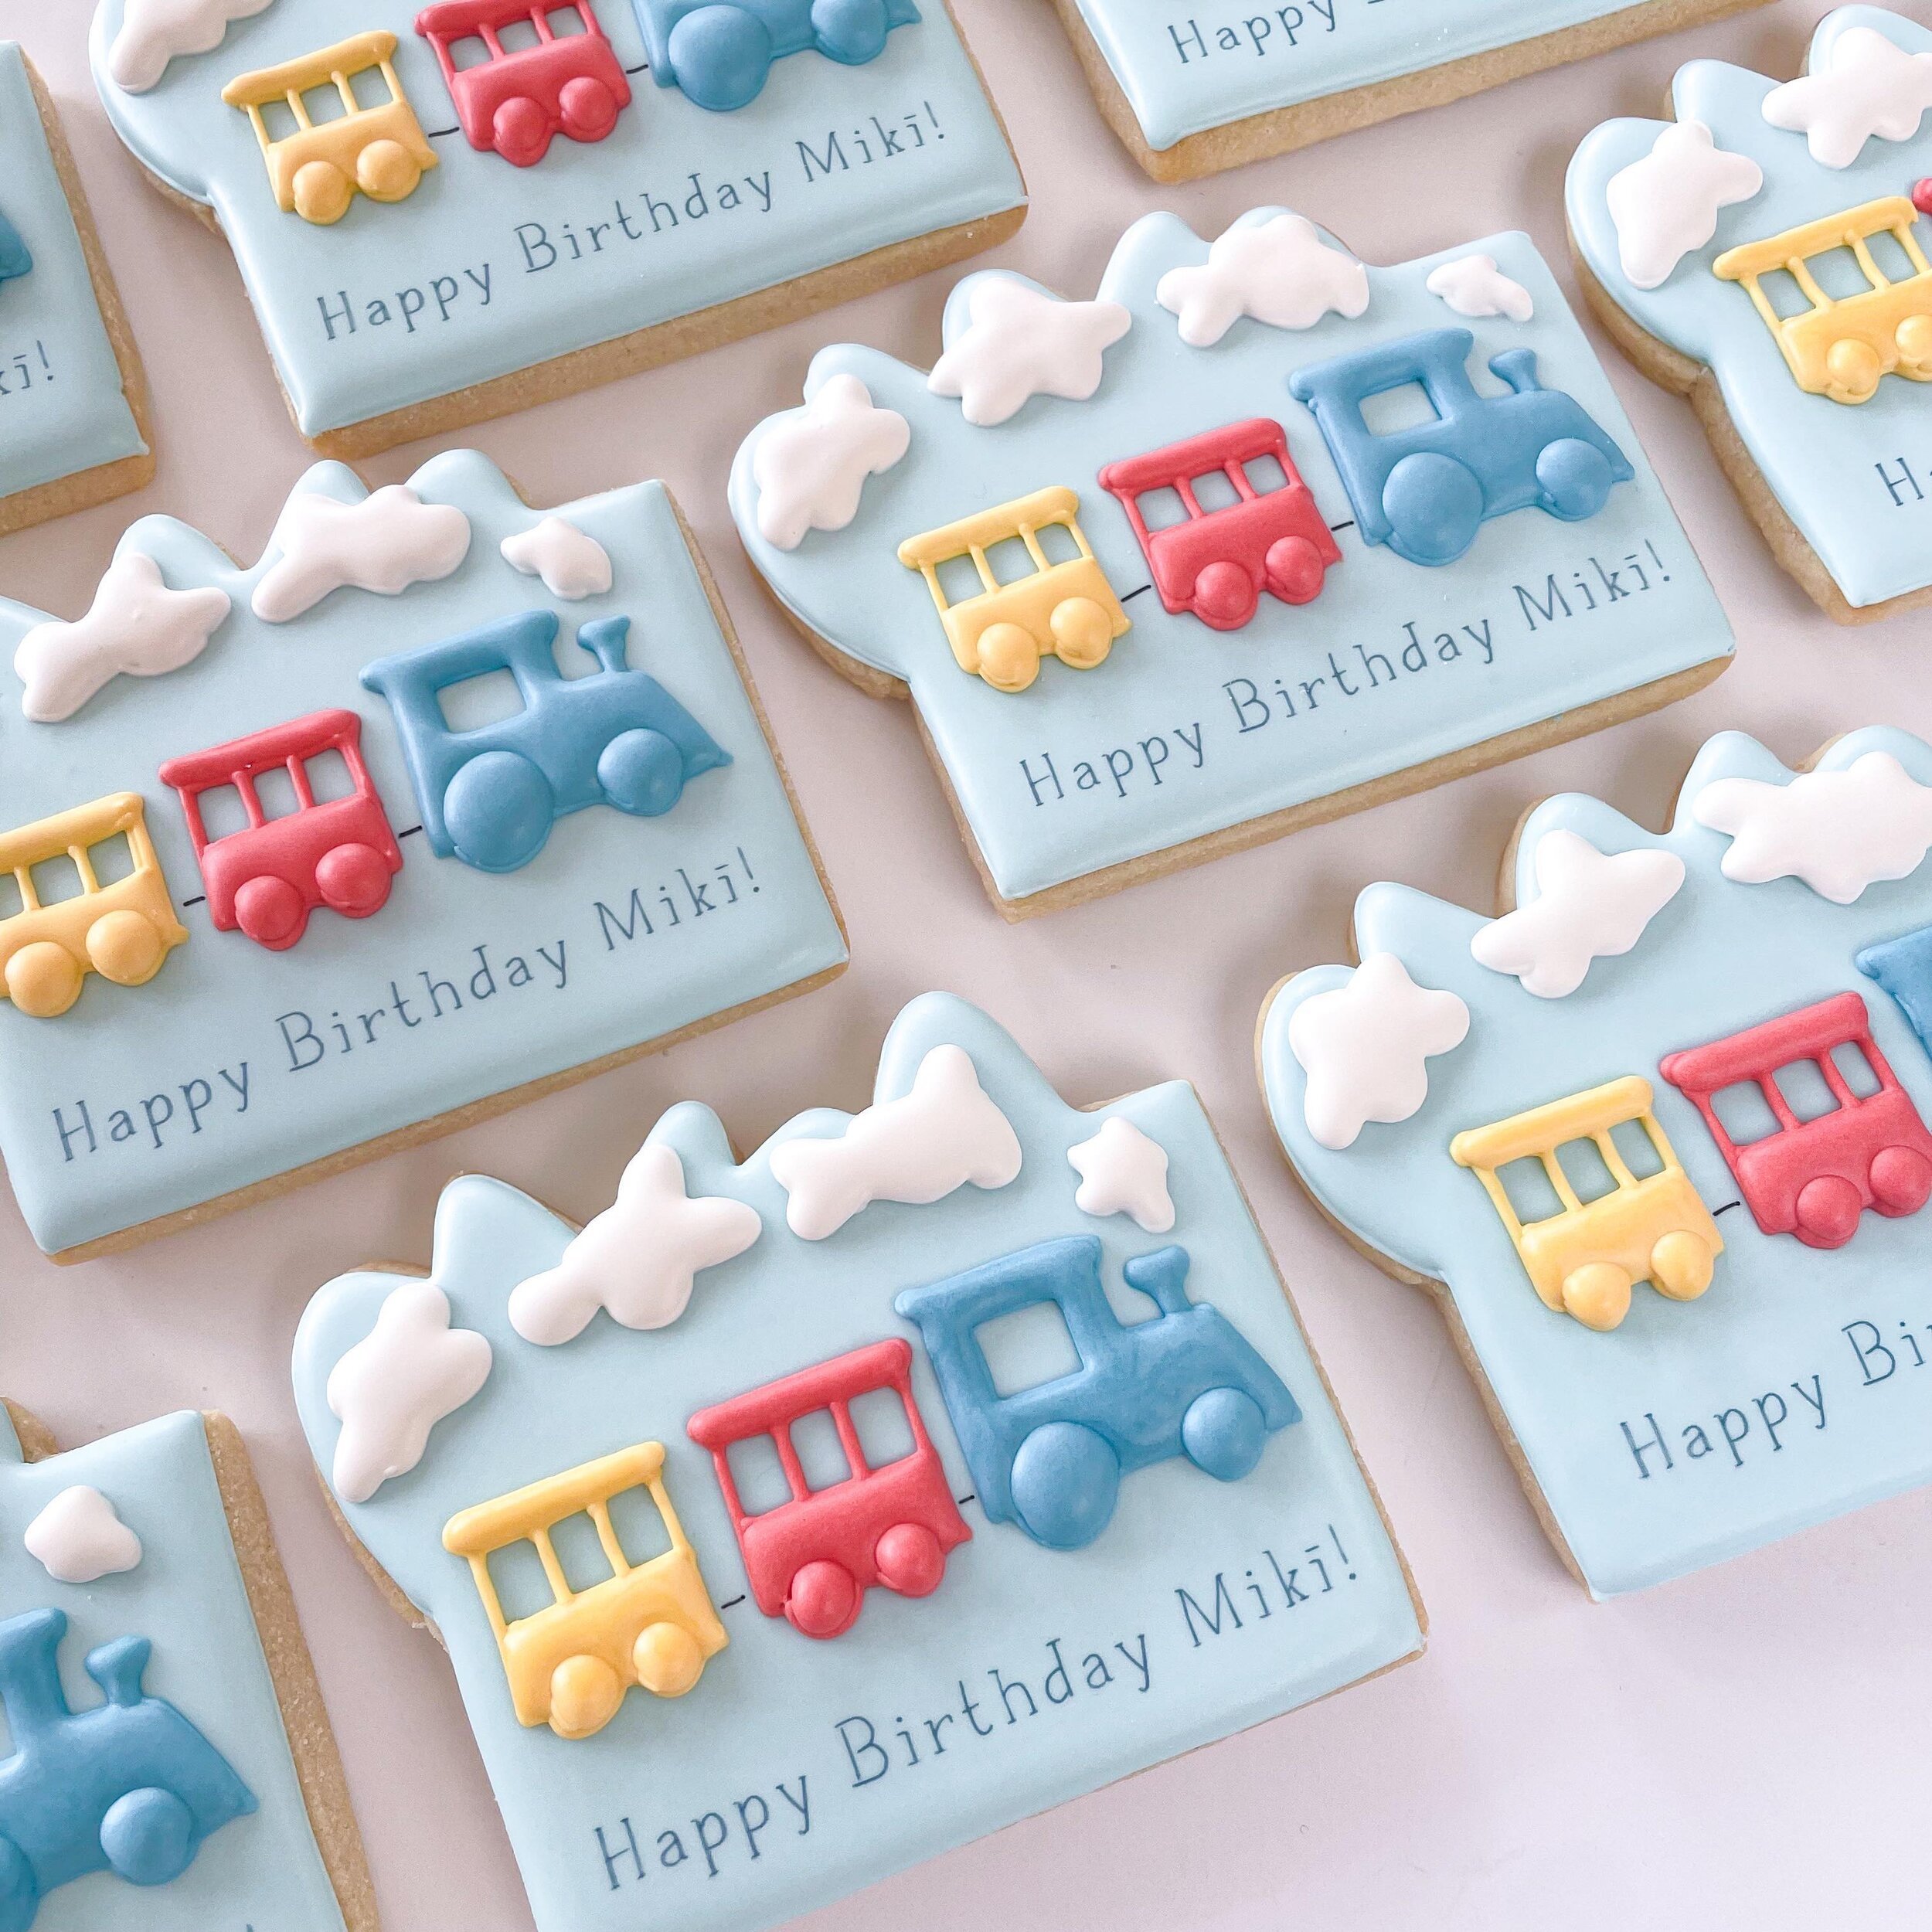 Birthday cookies for a train-loving little guy. 

#traincookies #sugarcookies #royalicing